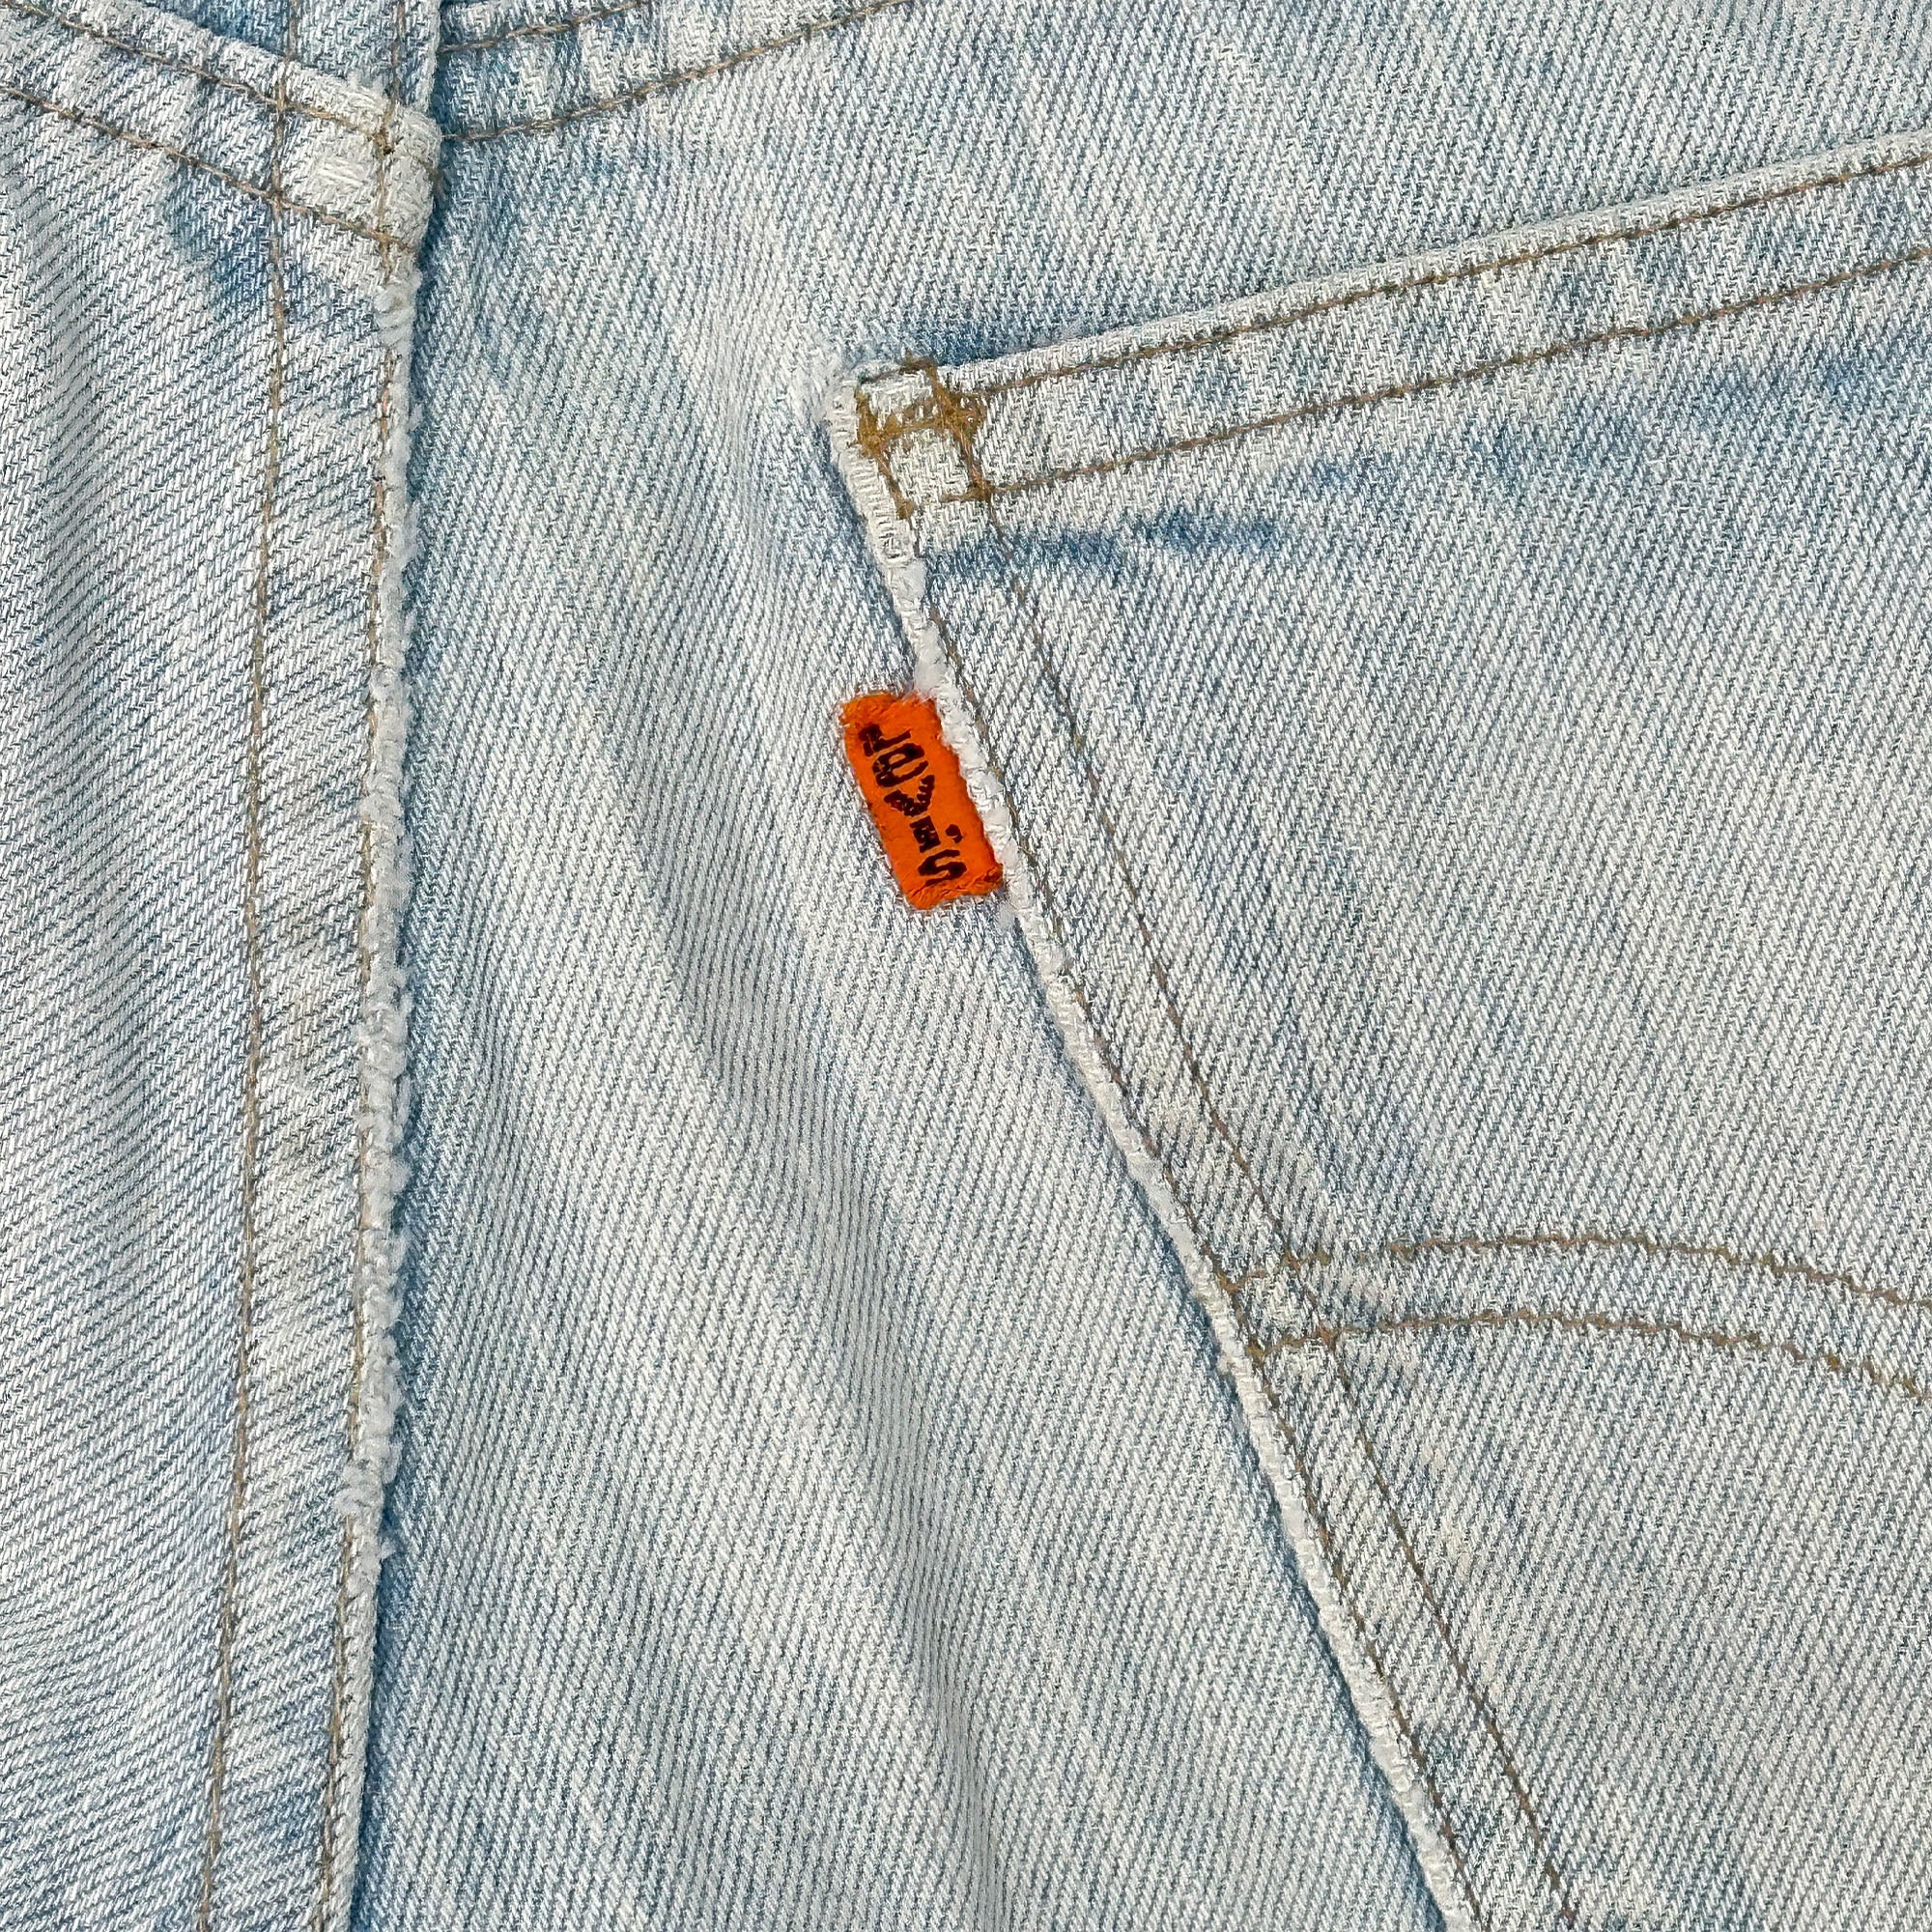 Vintage Levi's Orange Tab Cutoff Shorts - Talon 42, USA - 32x5-4